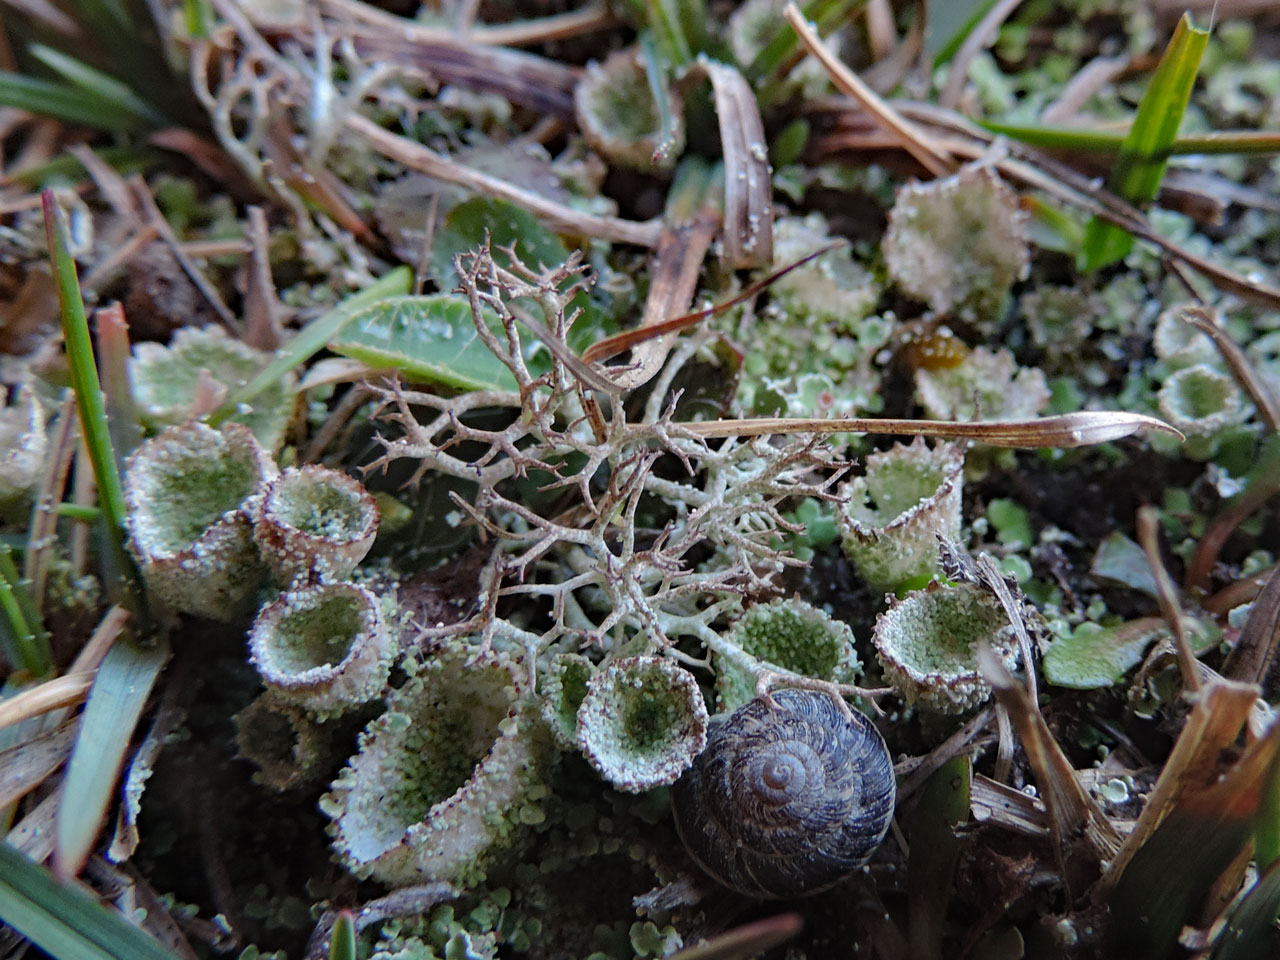 Cladonia humilis schizidiate form, Broom Hill, New Forest